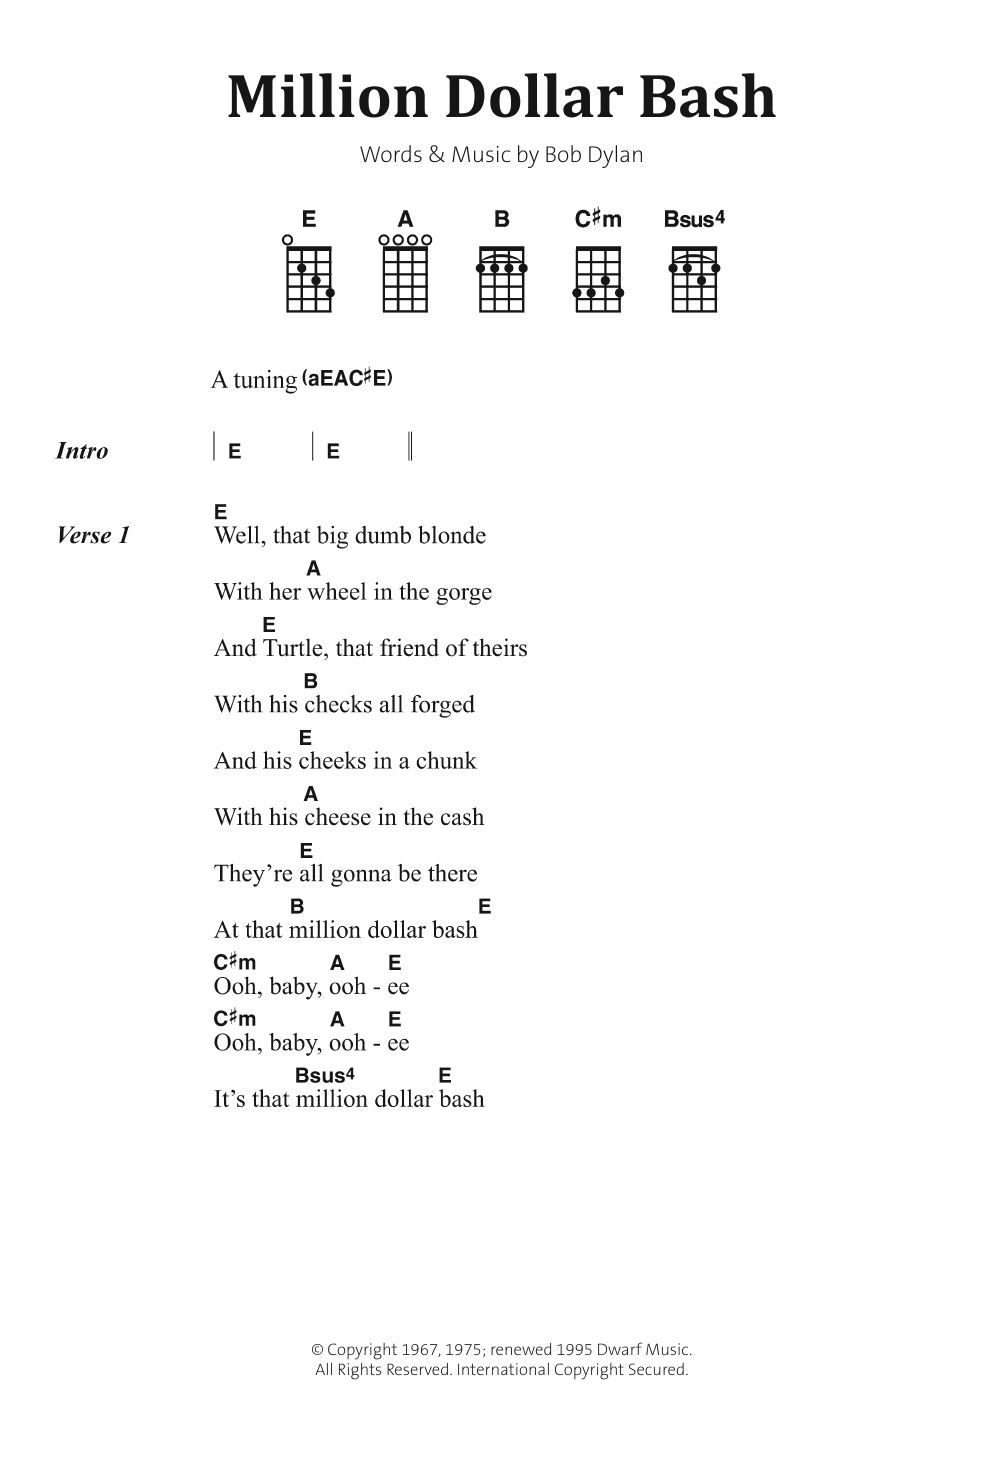 Download Bob Dylan Million Dollar Bash Sheet Music and learn how to play Banjo Lyrics & Chords PDF digital score in minutes